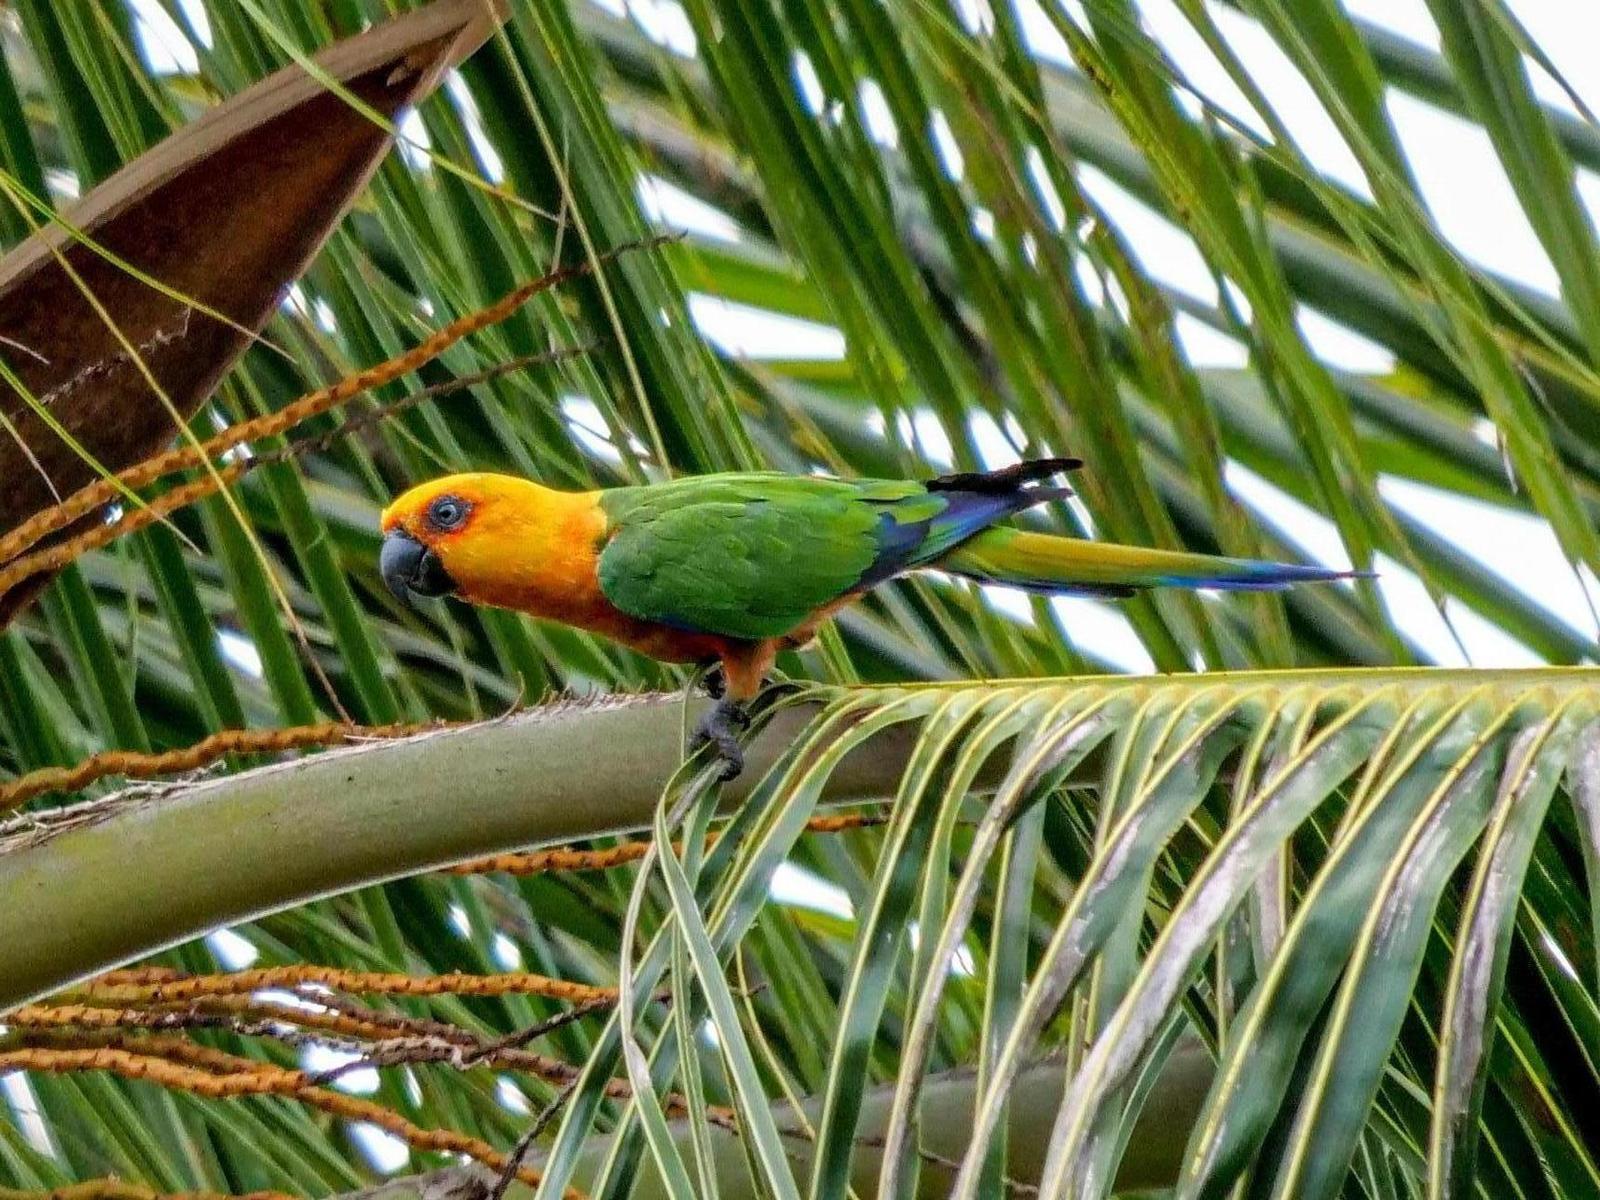 Jandaya Parakeet Photo by Roger Horn